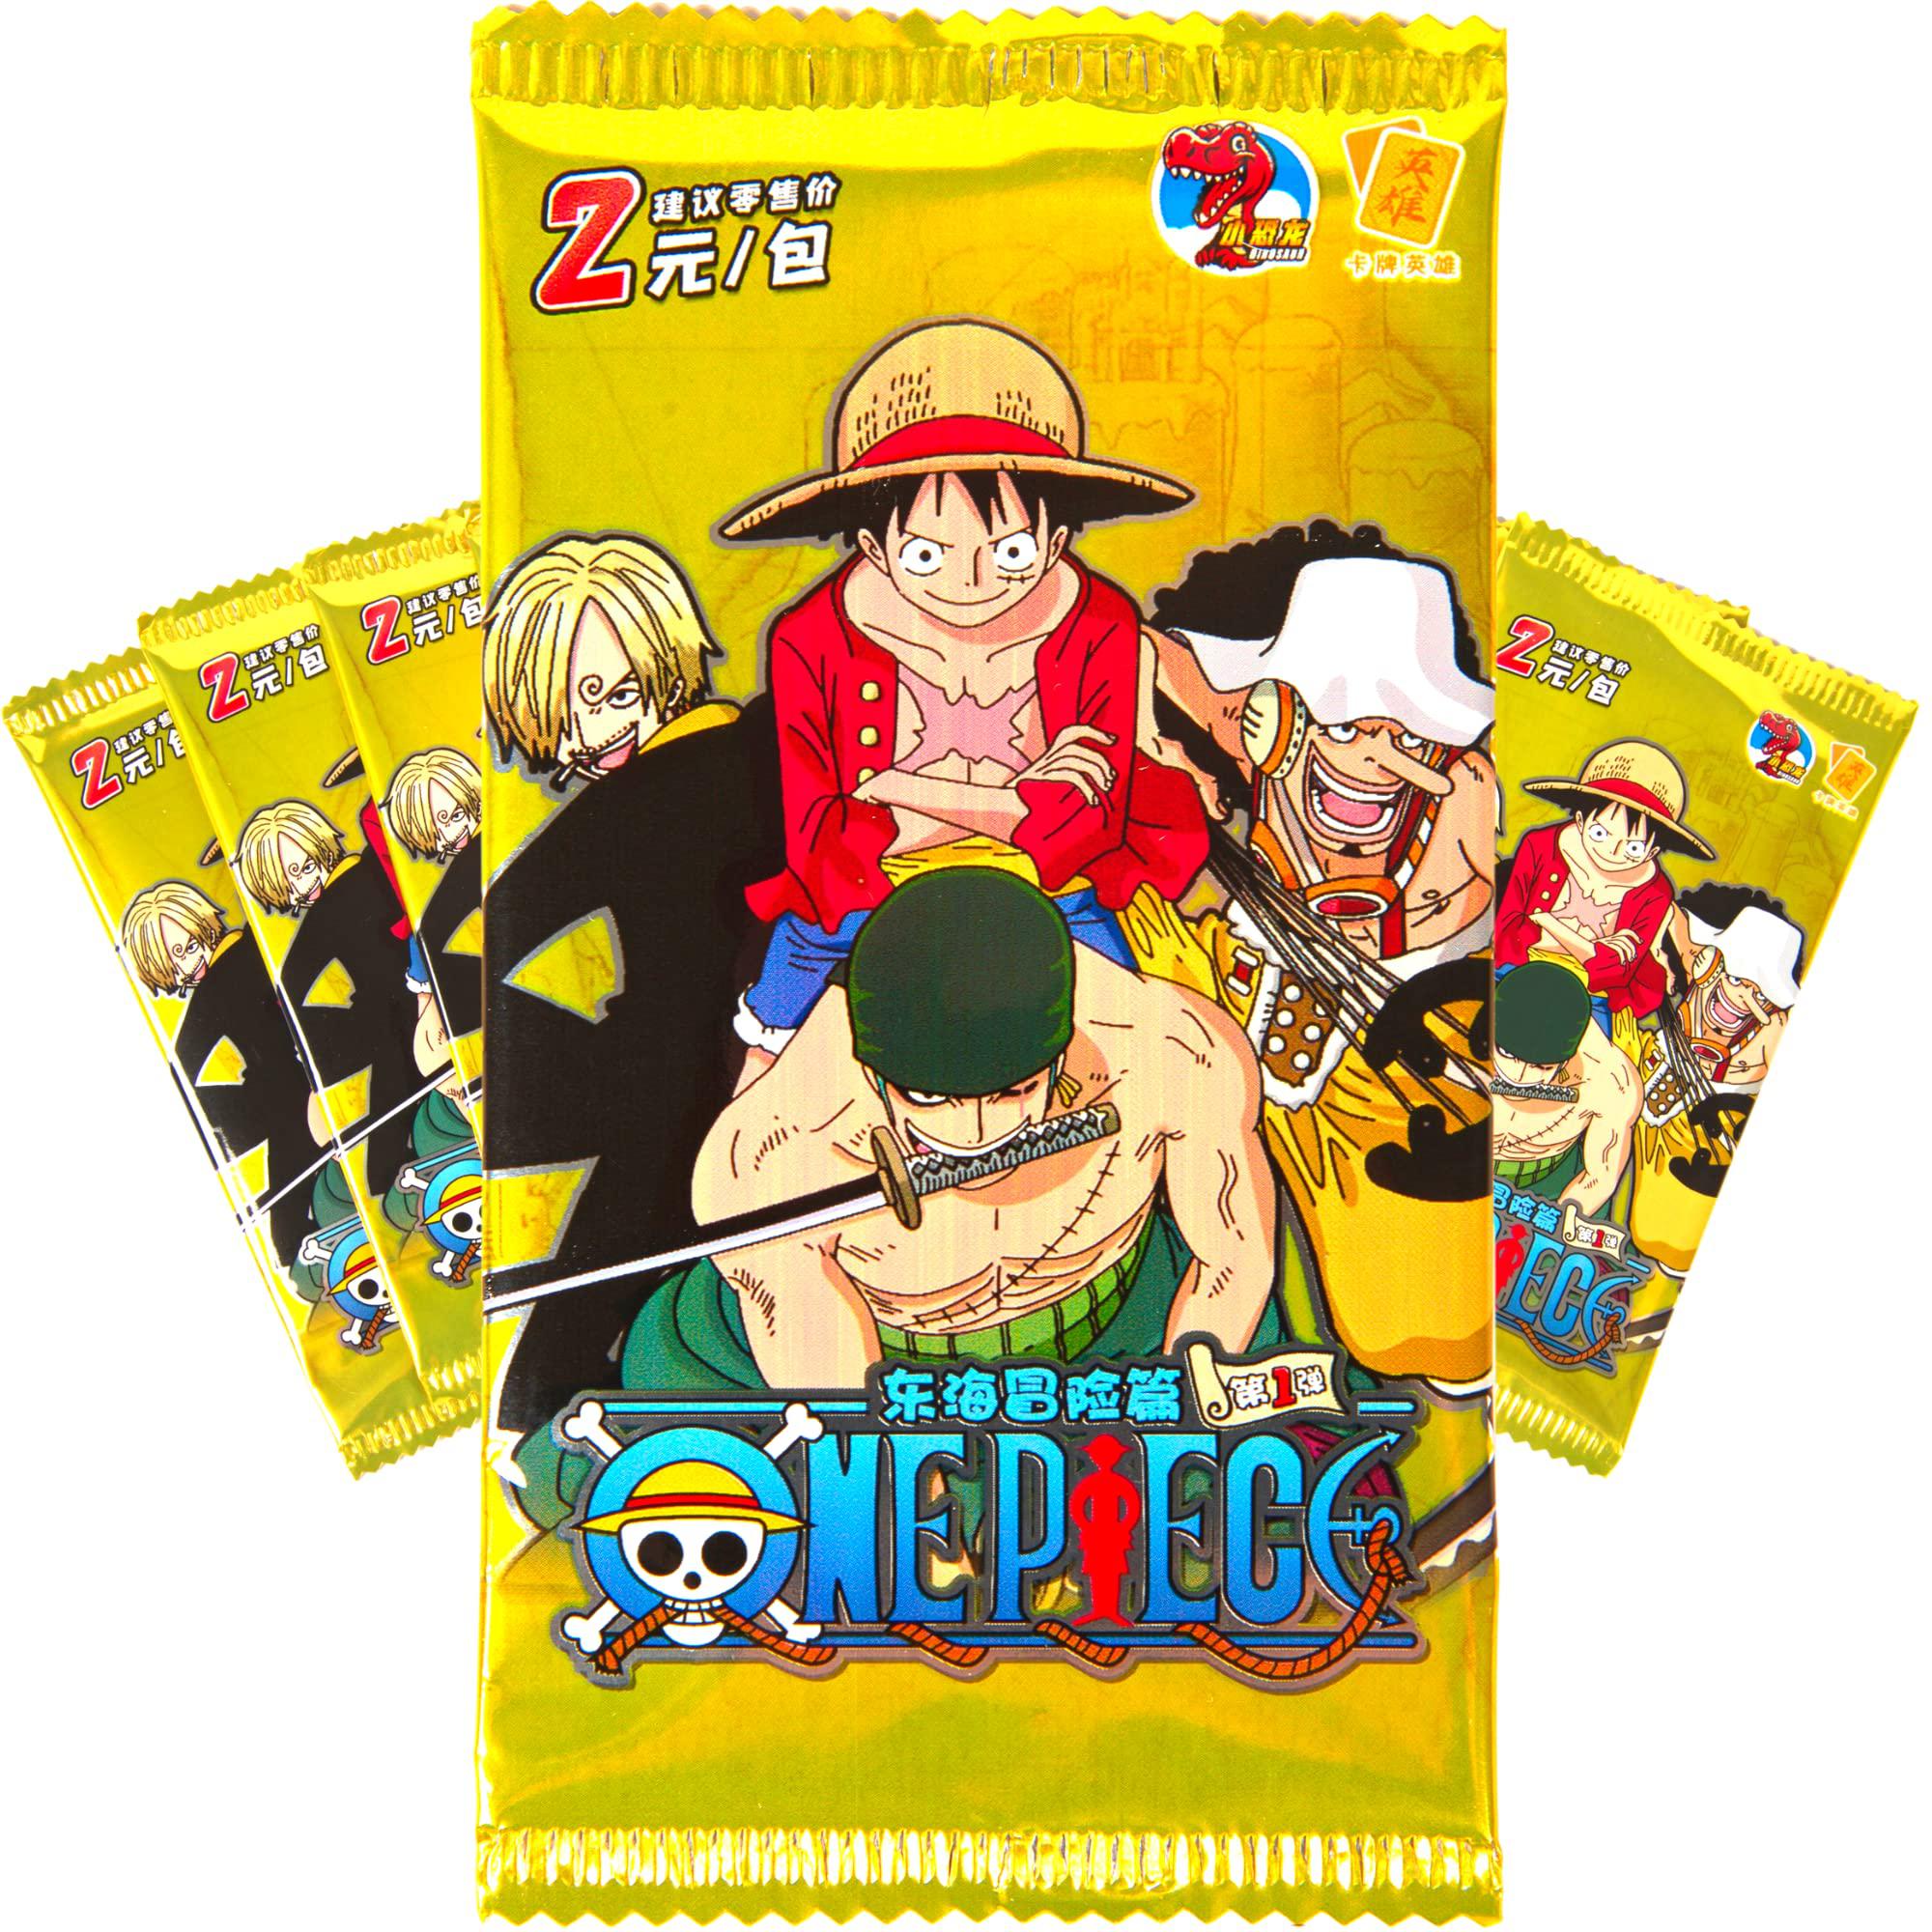 AW Anime WRLD one piece card game - [imported] anime tcg trading cards booster packs (10 packs) - aw anime wrld